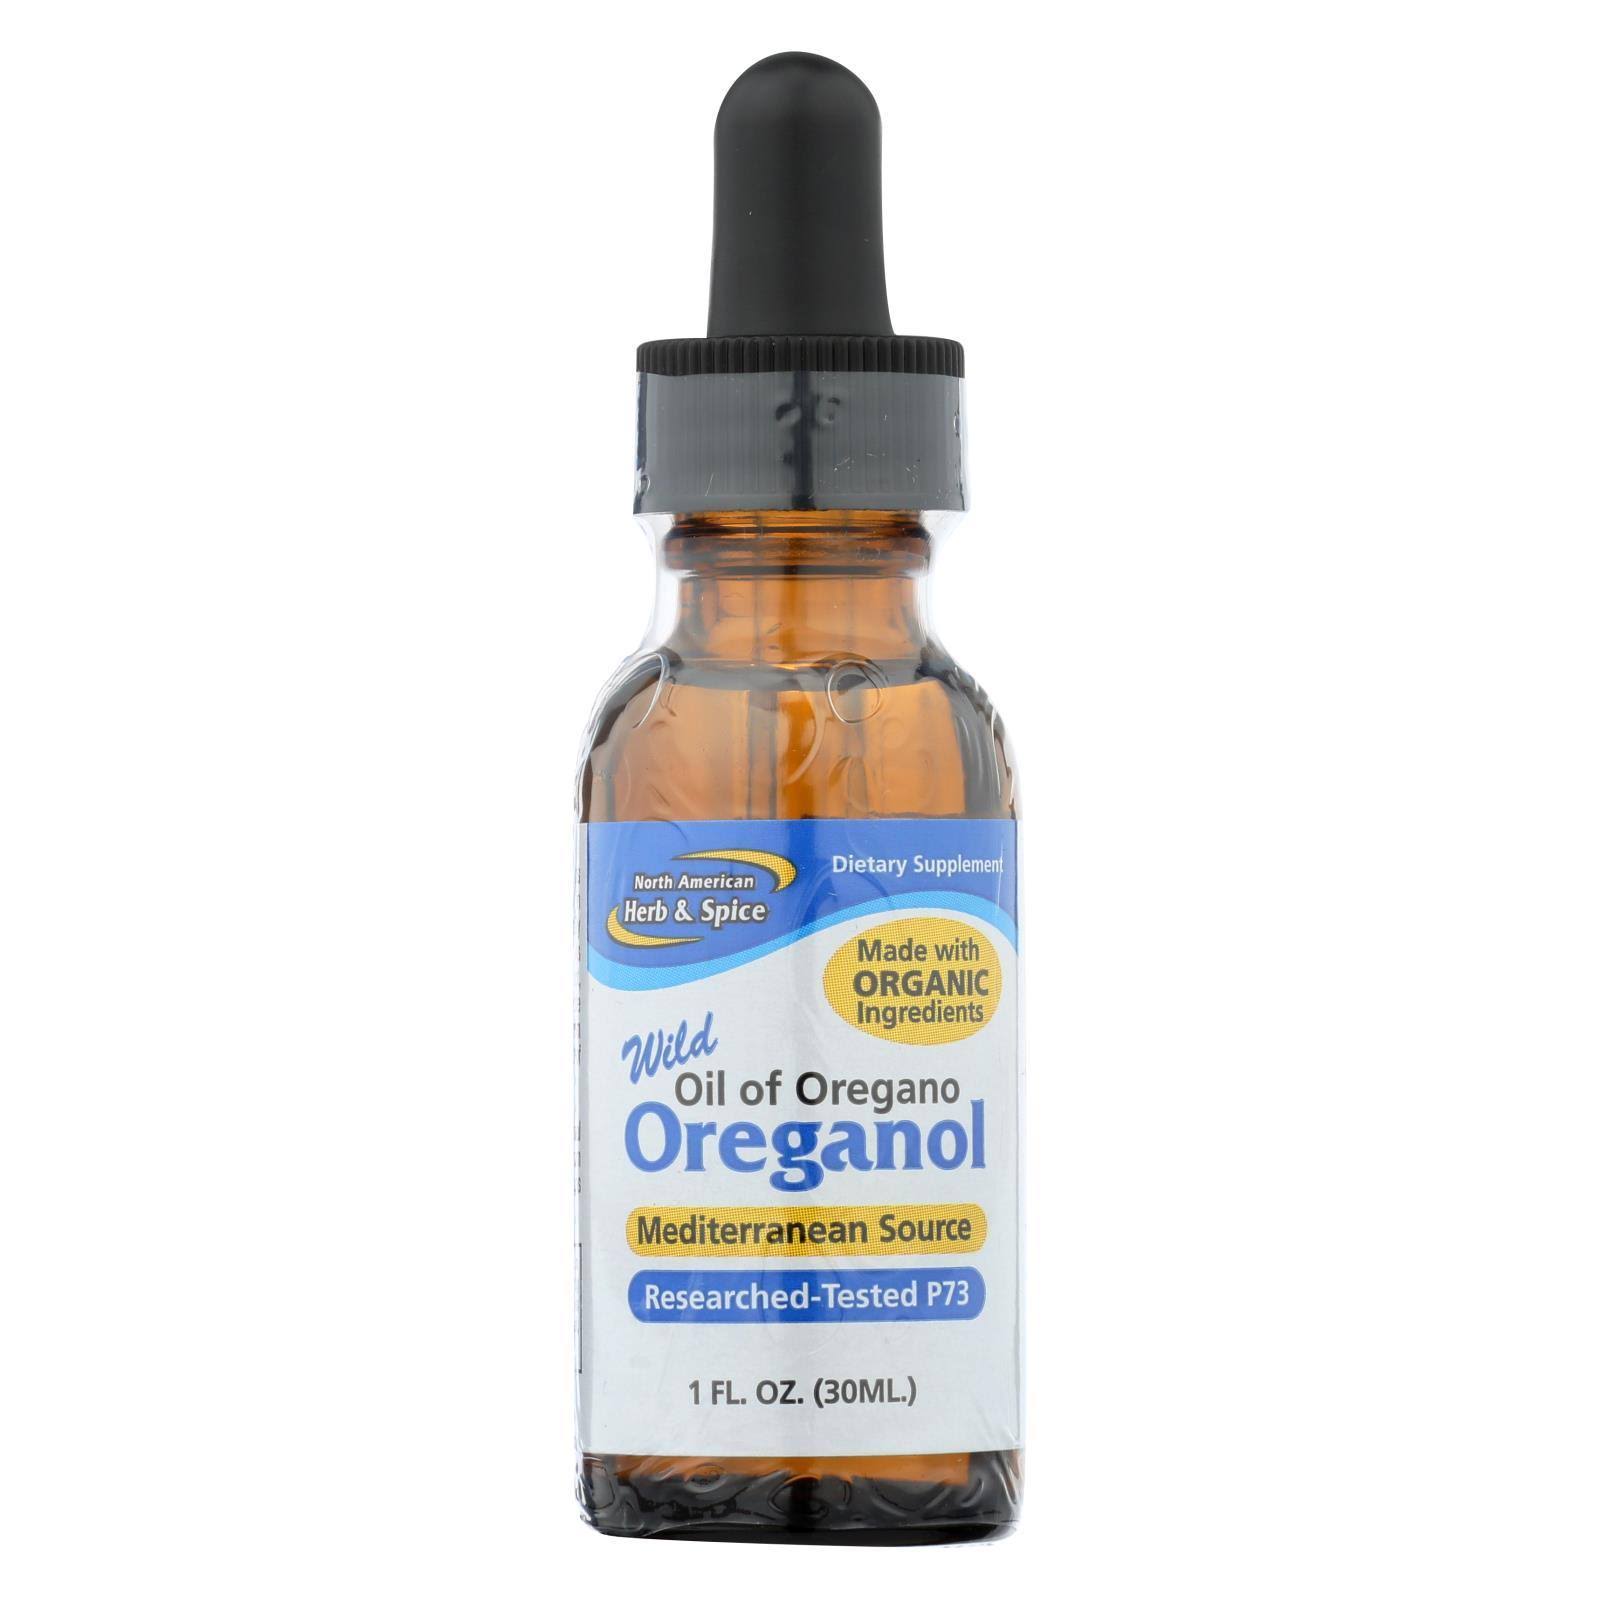 North American Herb & Spice Oreganol Oil Of Oregano - 30ml